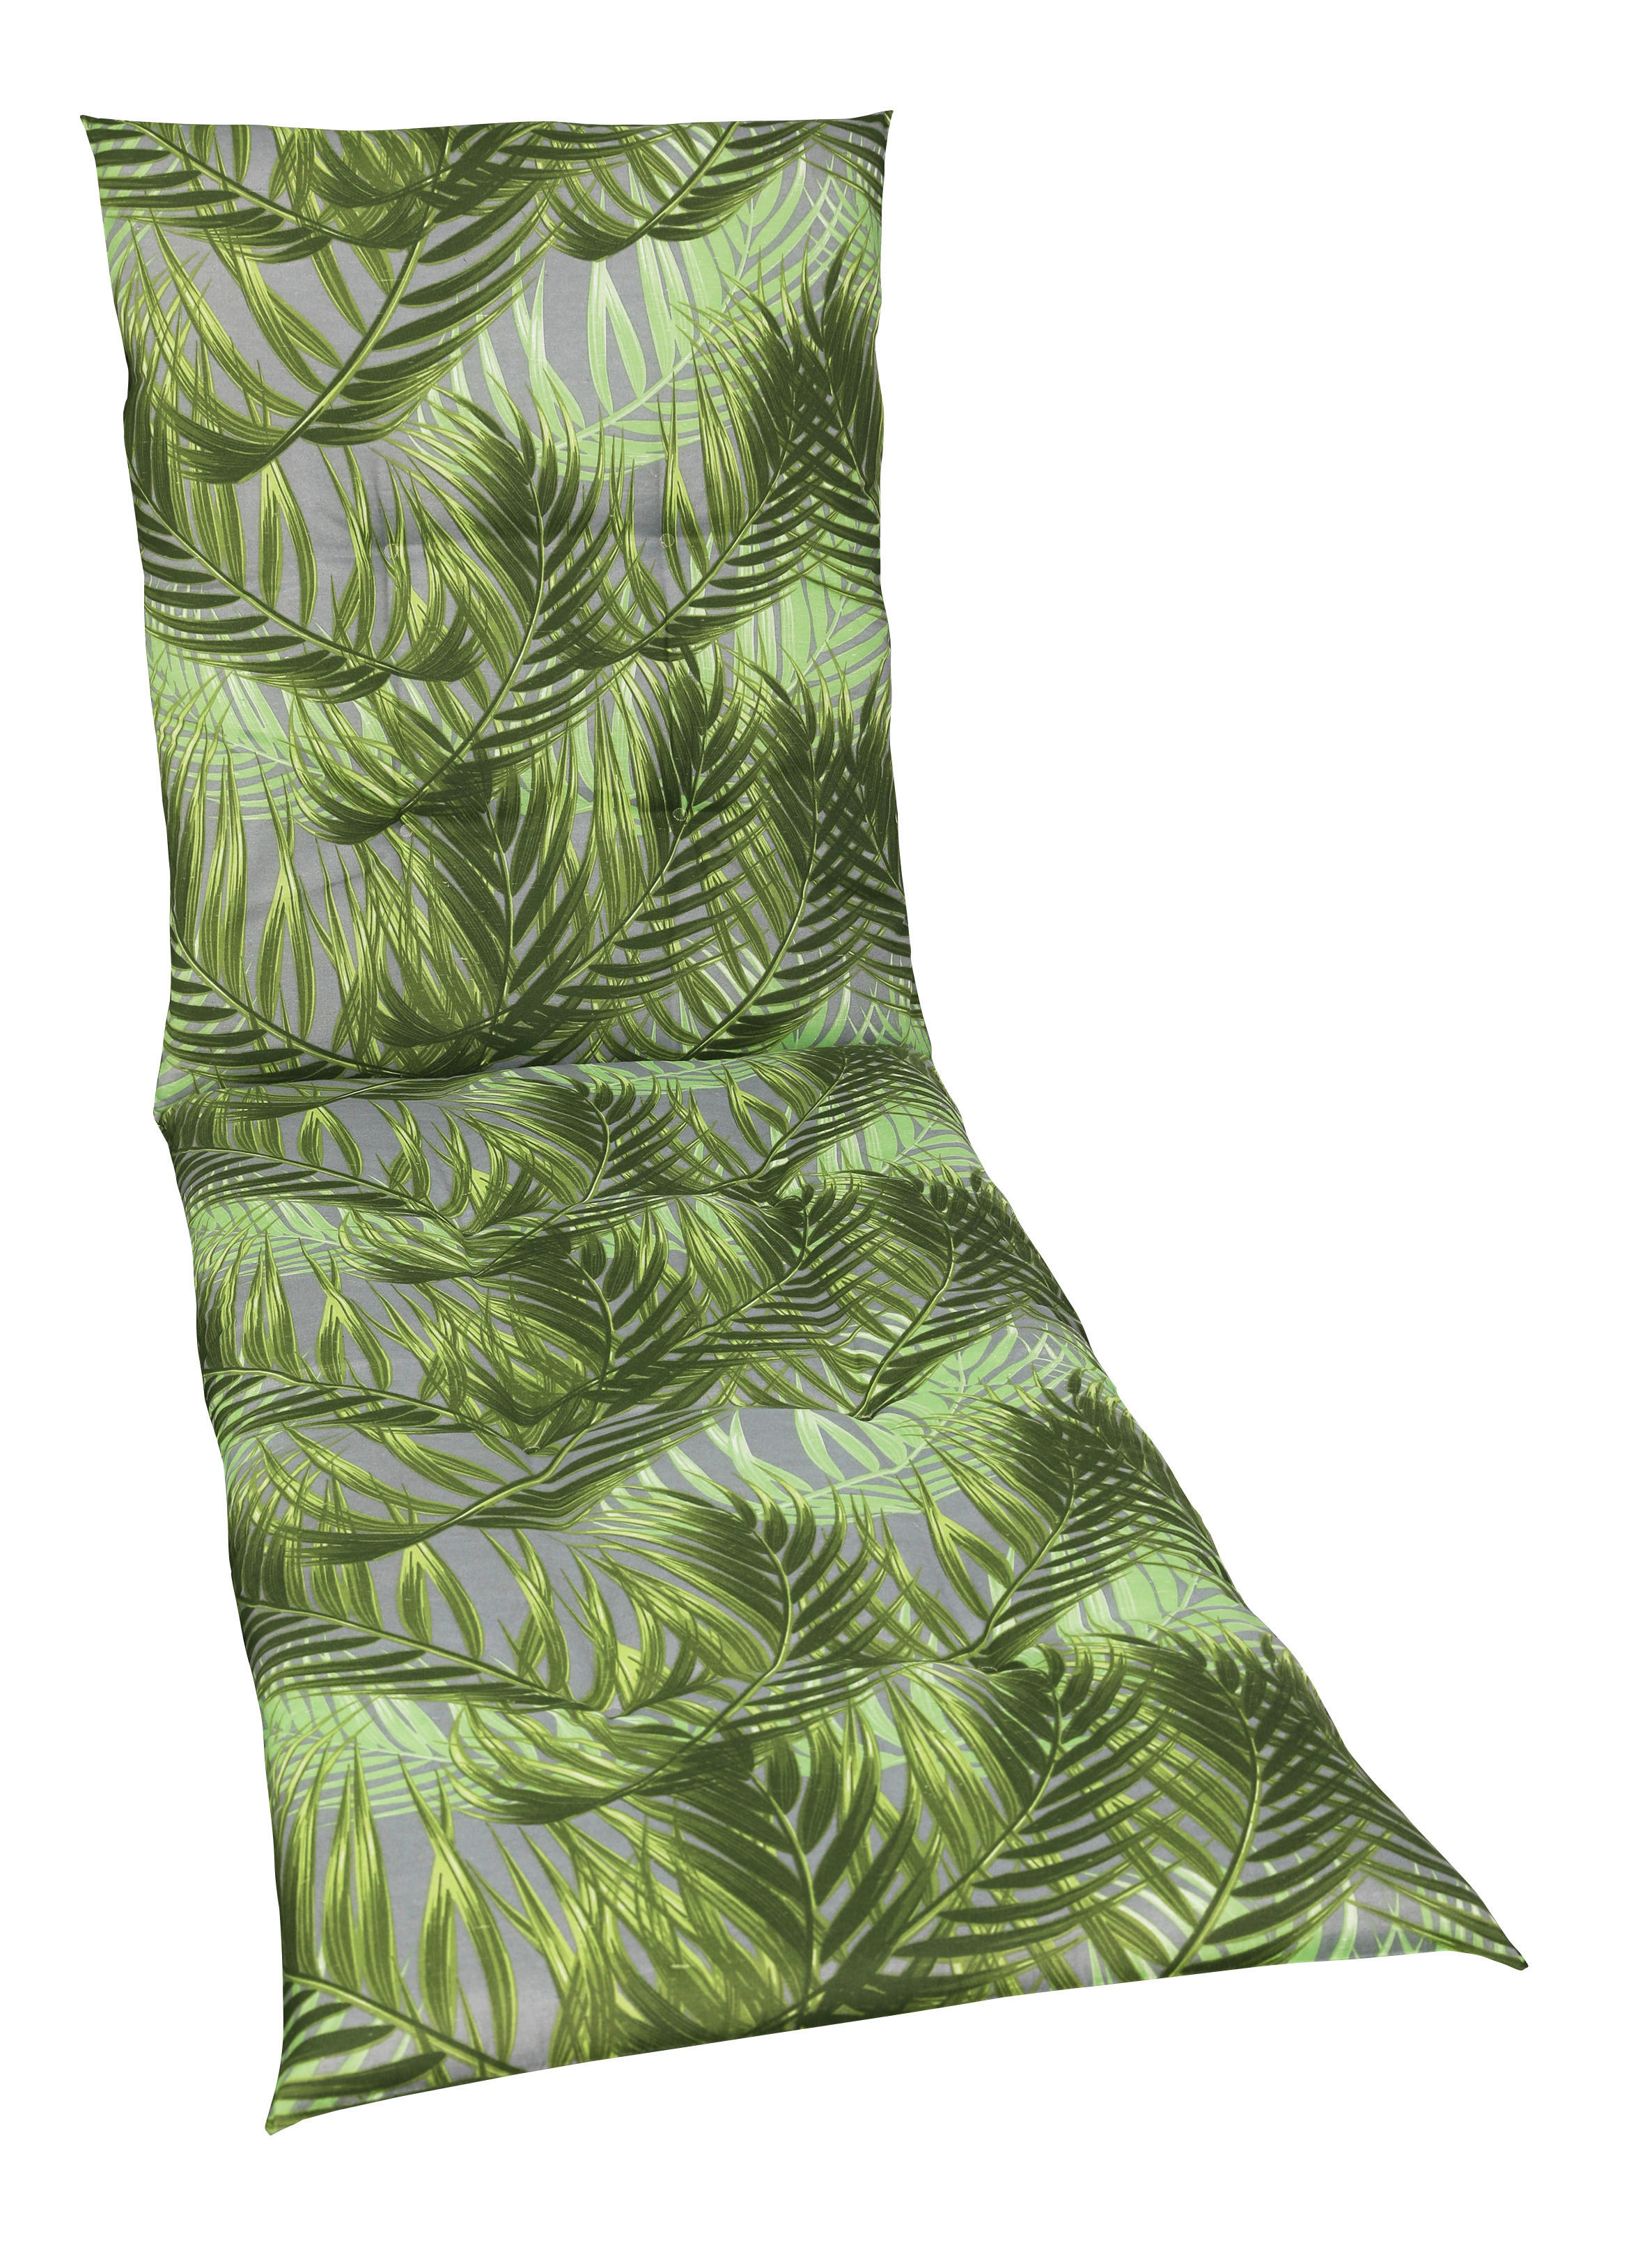 NAPOZÓÁGYPÁRNA szürke, zöld levelek  - szürke/zöld, Design, textil (58/5/188cm)